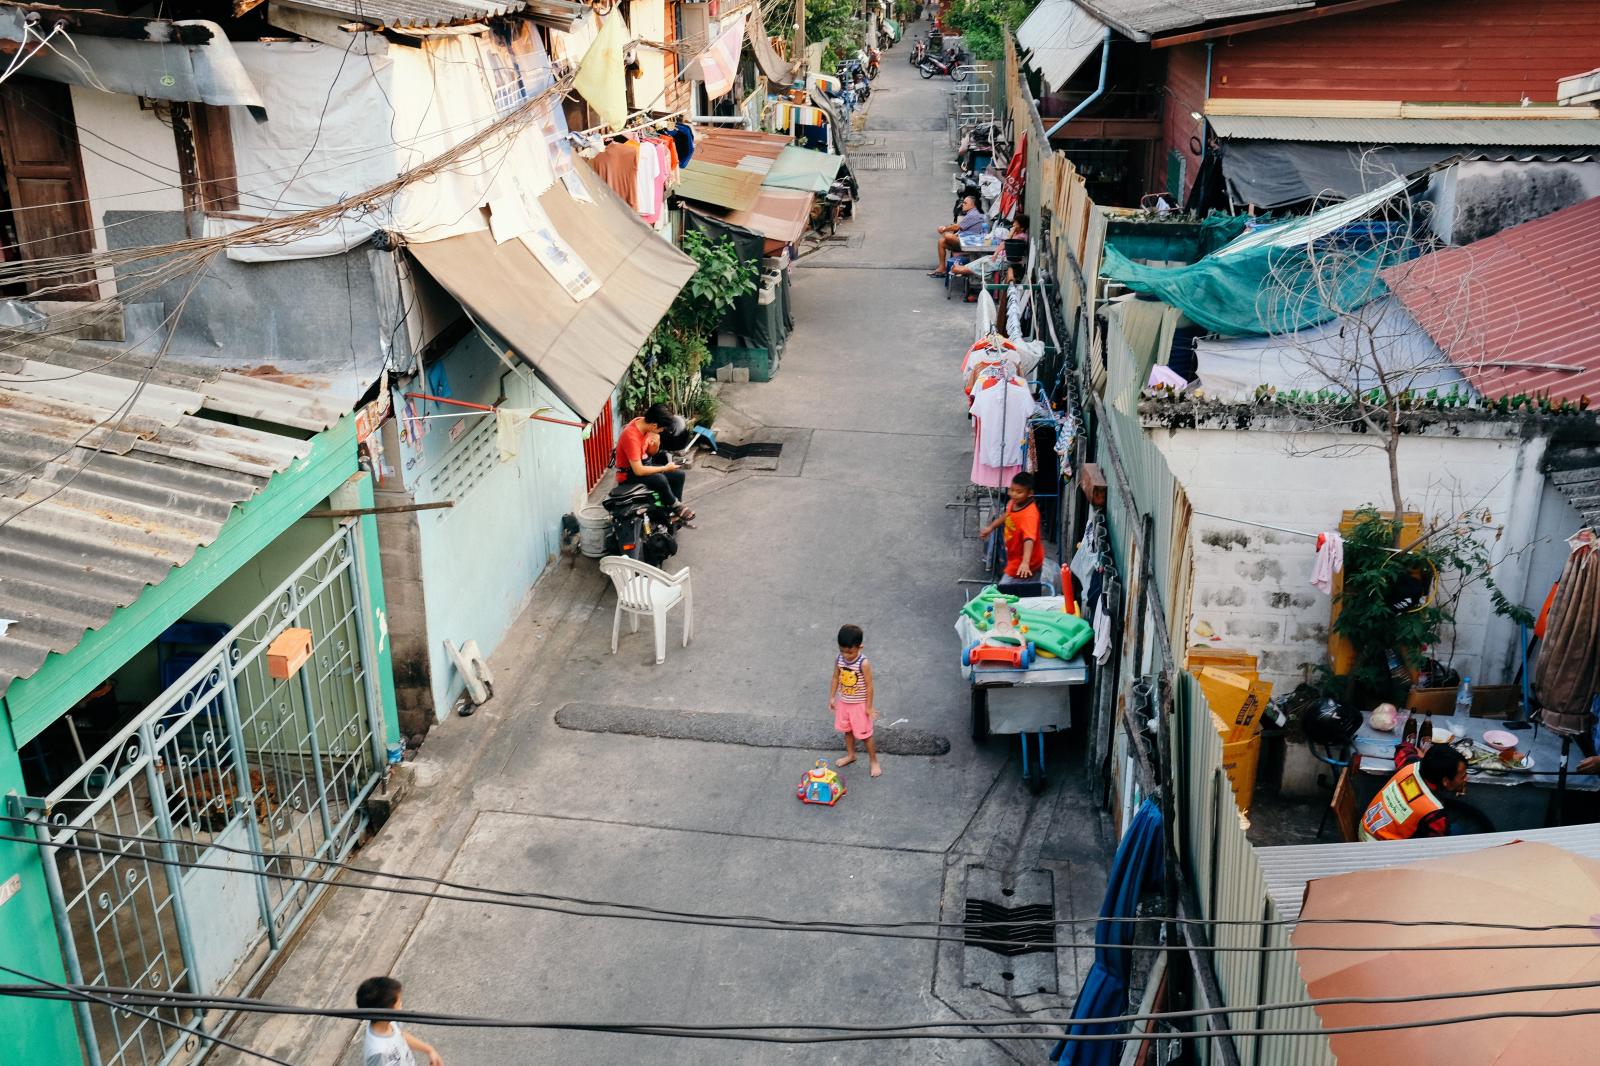 Street scene in Bangkok | Buy this image